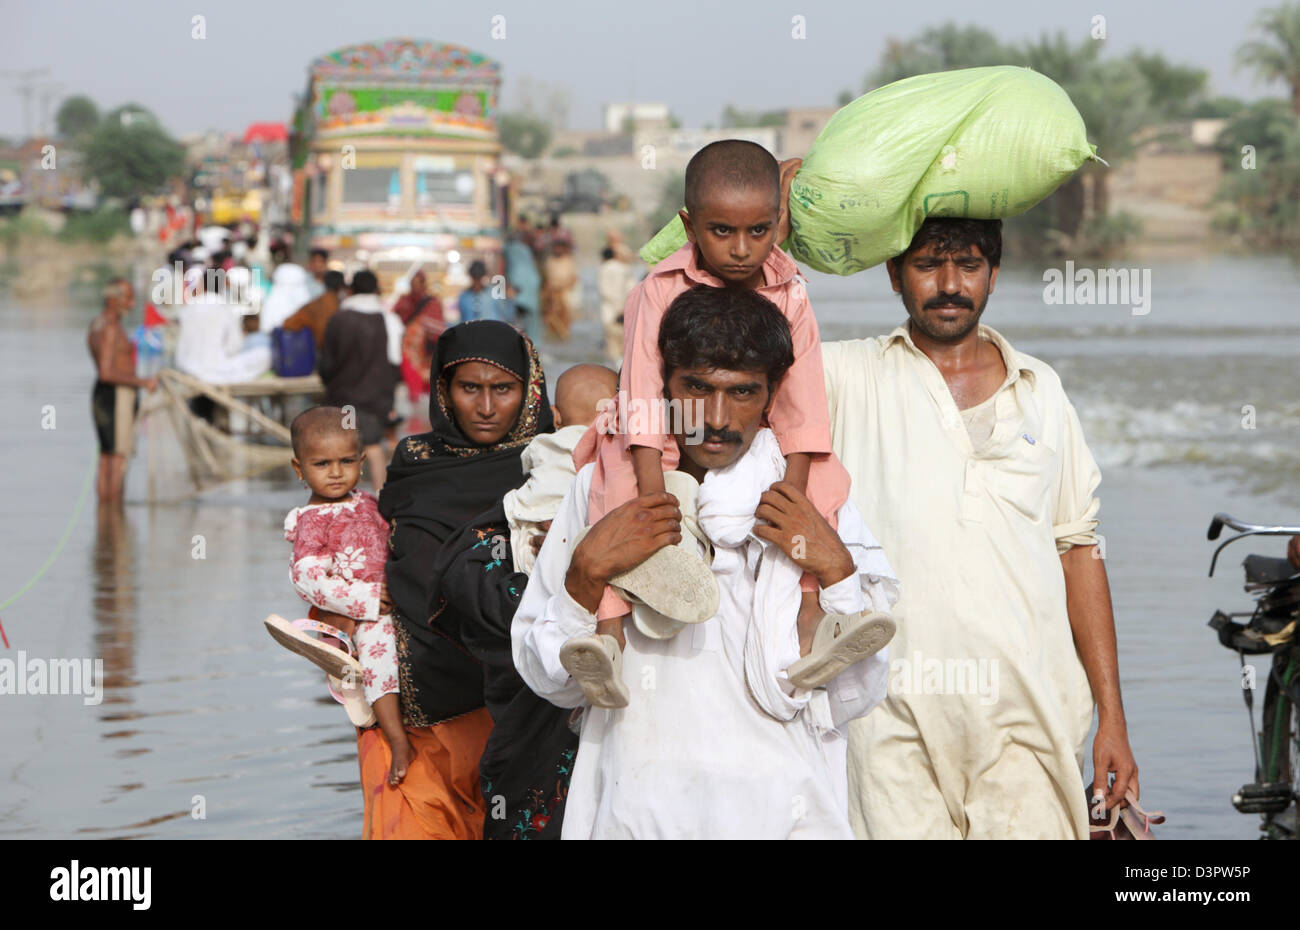 Muzaffargarh, Pakistan, People wade through flooded streets by Stock Photo